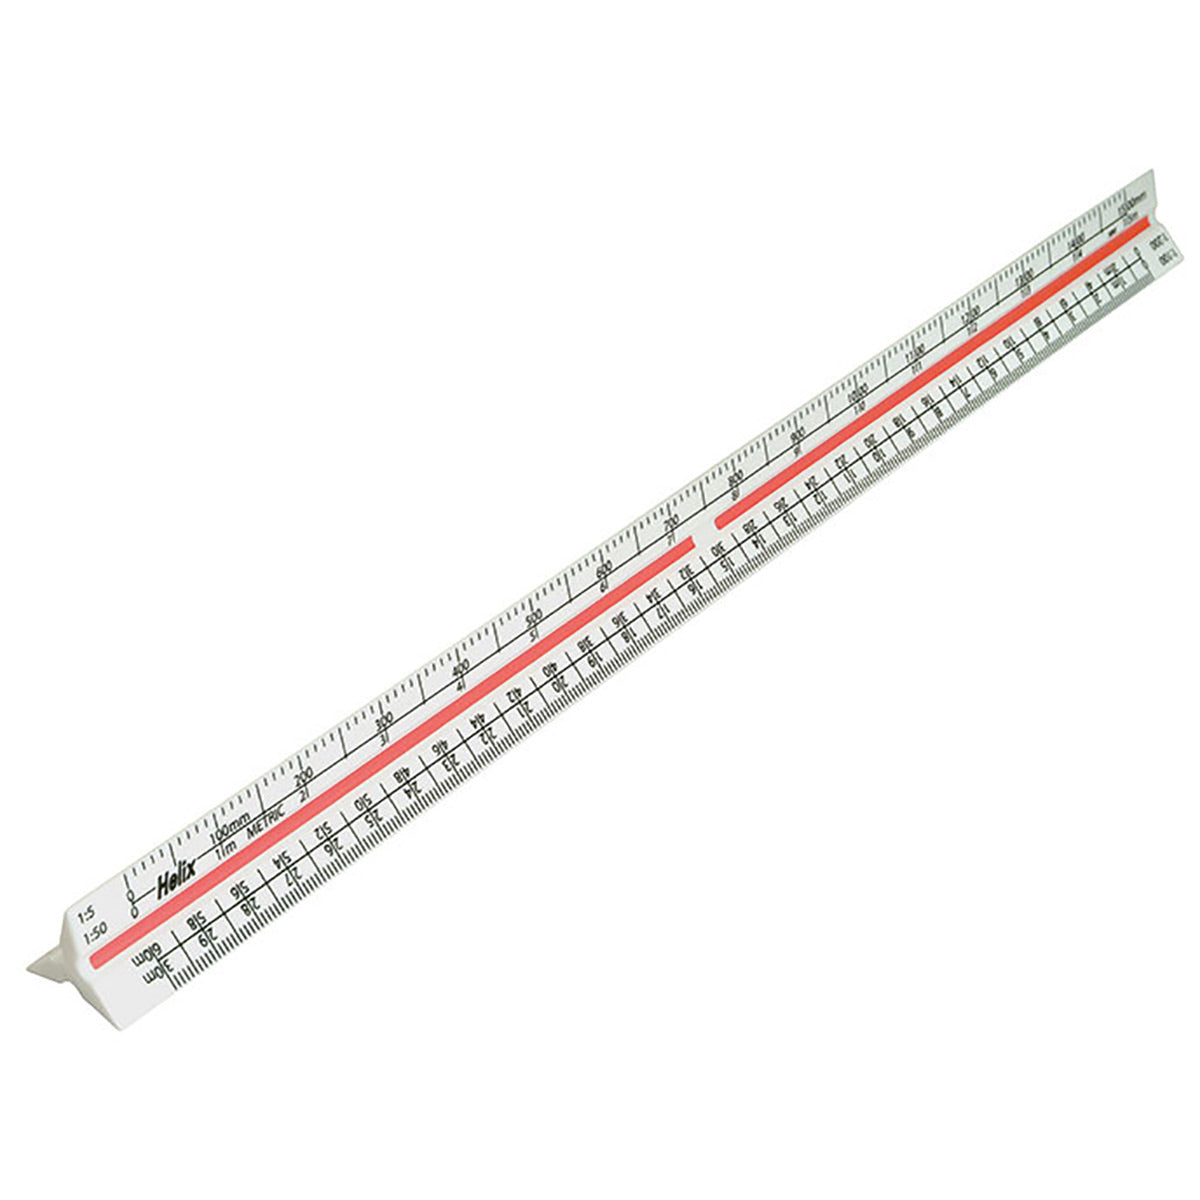 Helix 300Mm Metric Triangular Scale Ruler